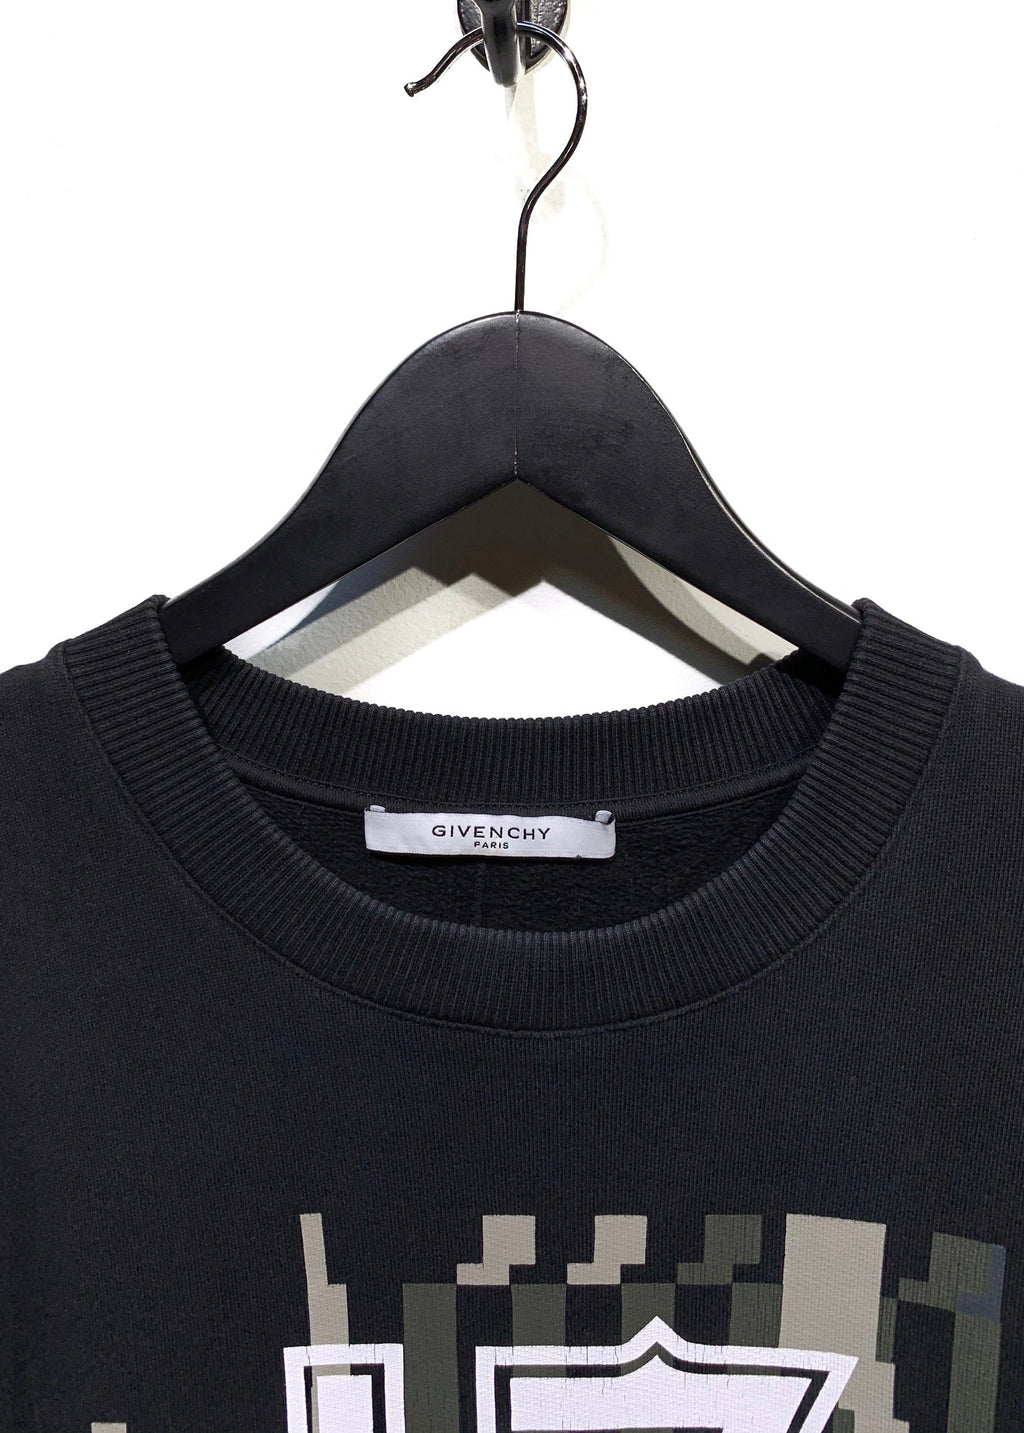 Givenchy Black "17" Graphic Printed Sweatshirt